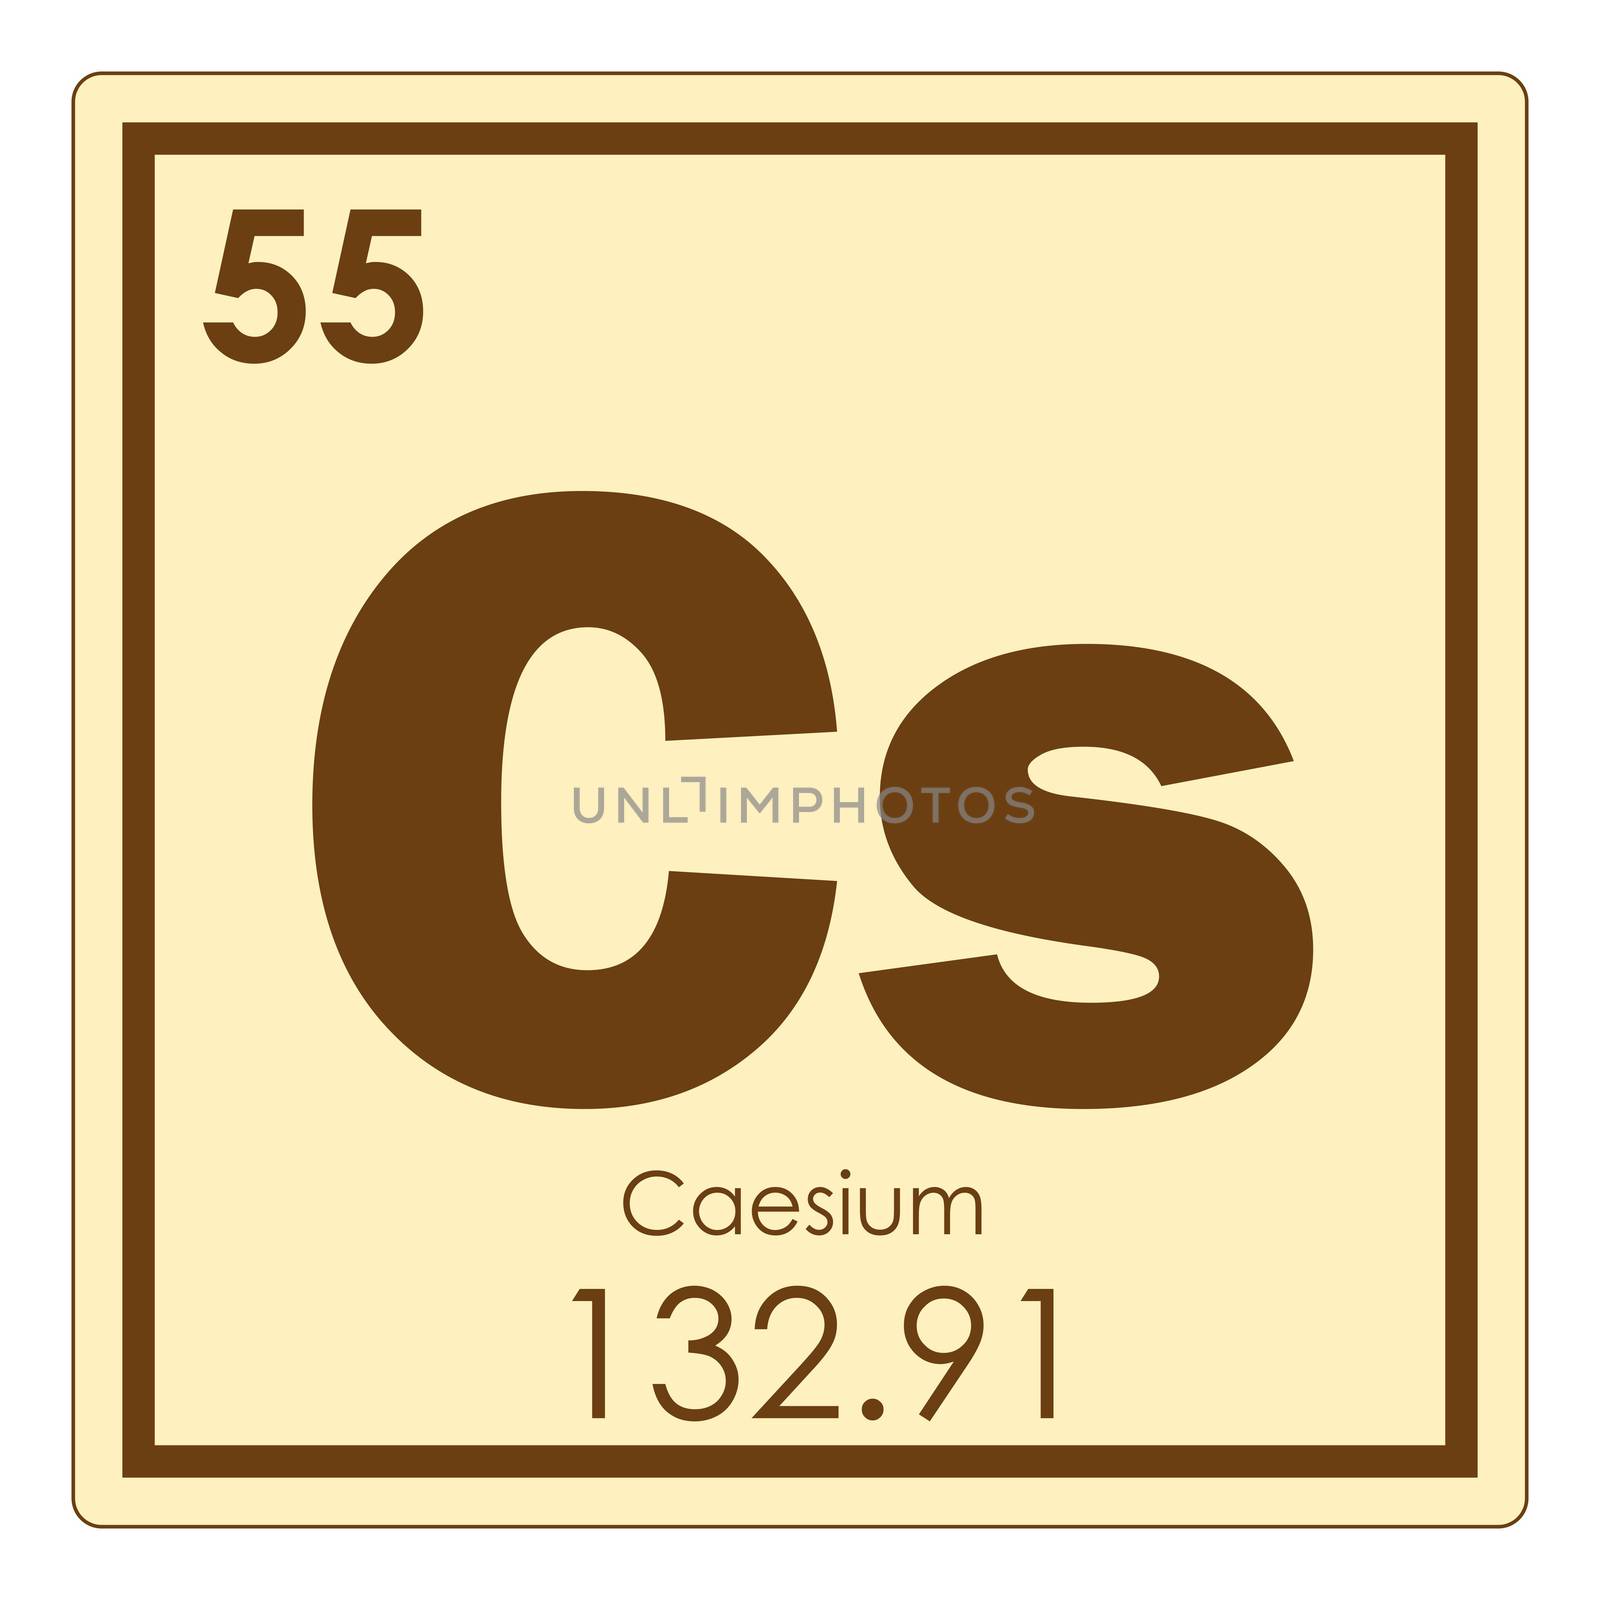 Caesium chemical element by tony4urban